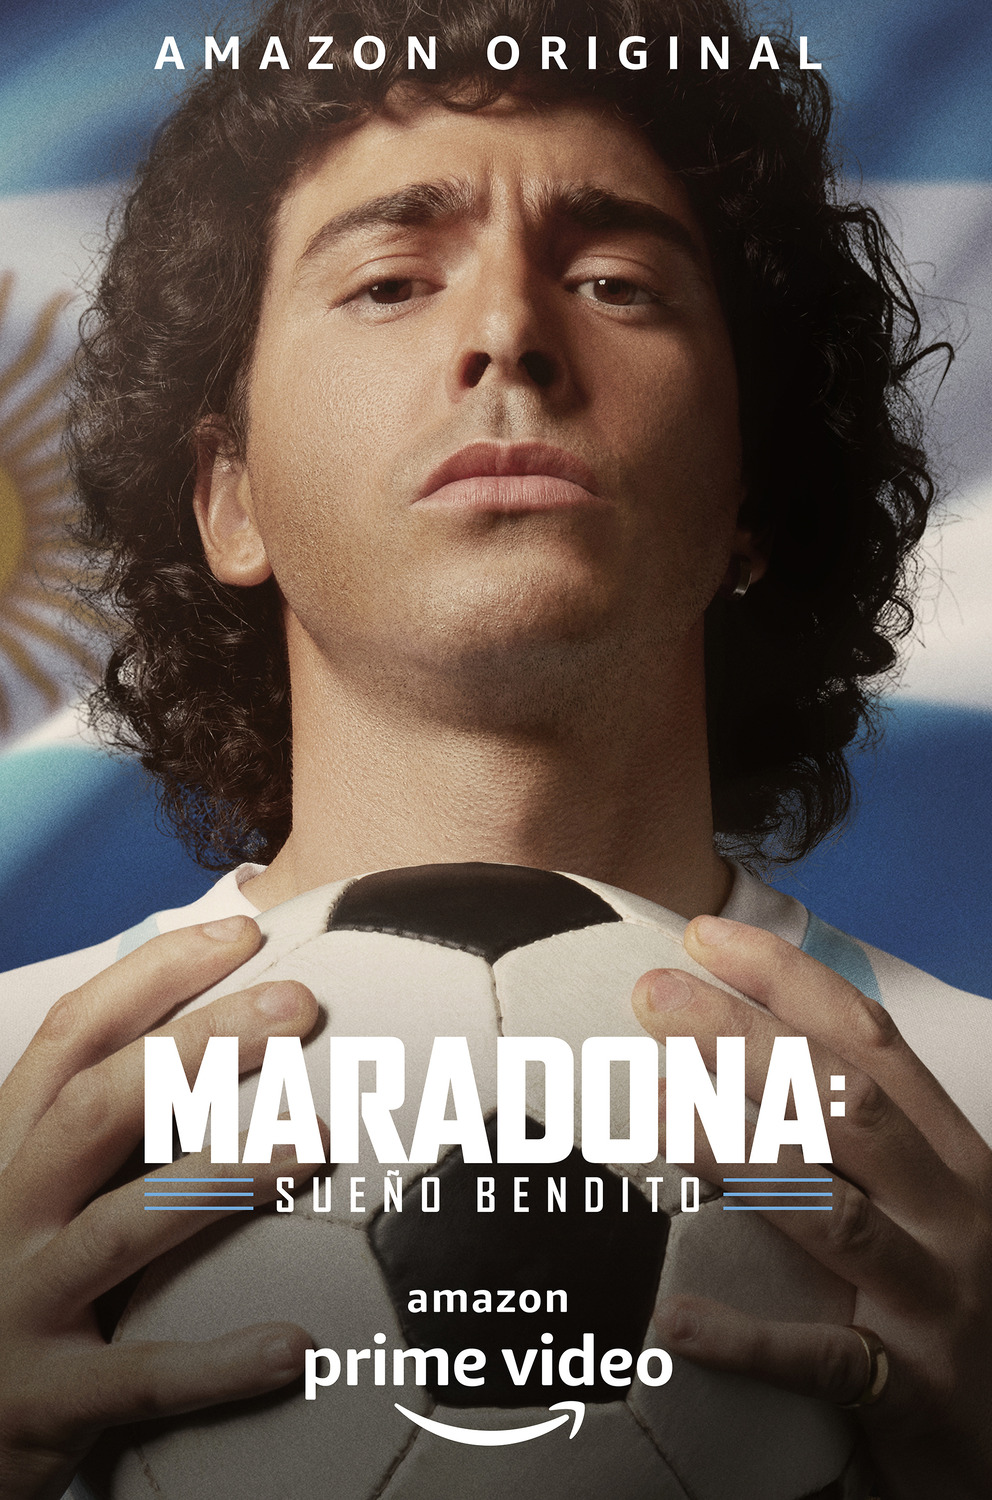 Extra Large TV Poster Image for Maradona, sueño bendito (#4 of 21)